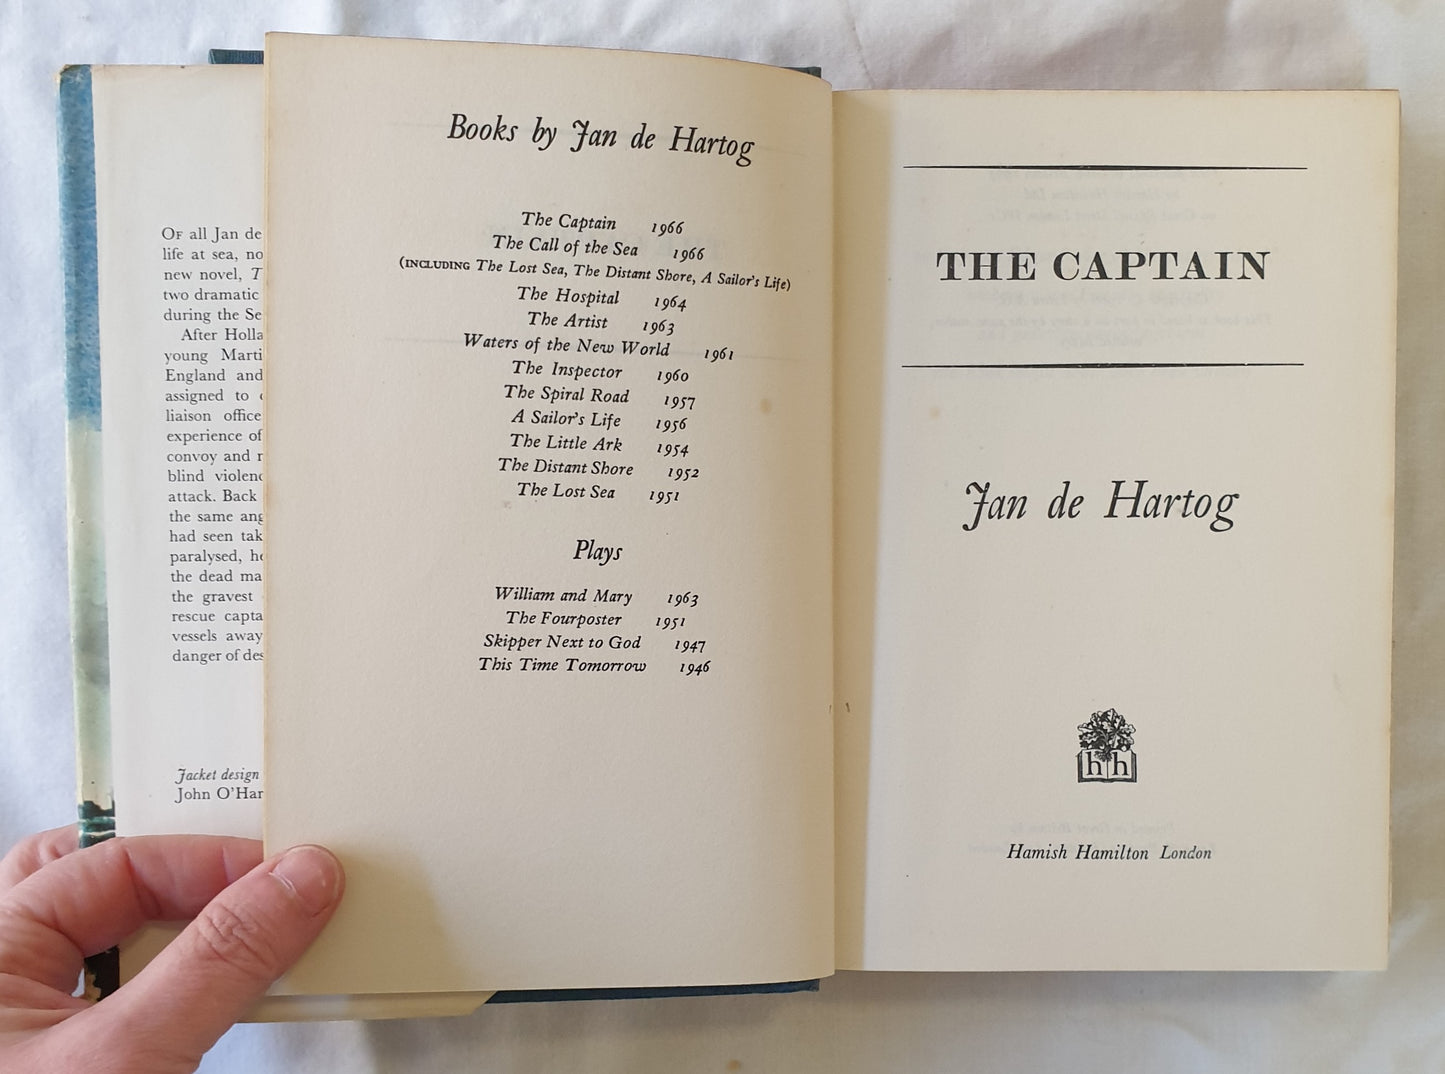 The Captain by Jan de Hartog